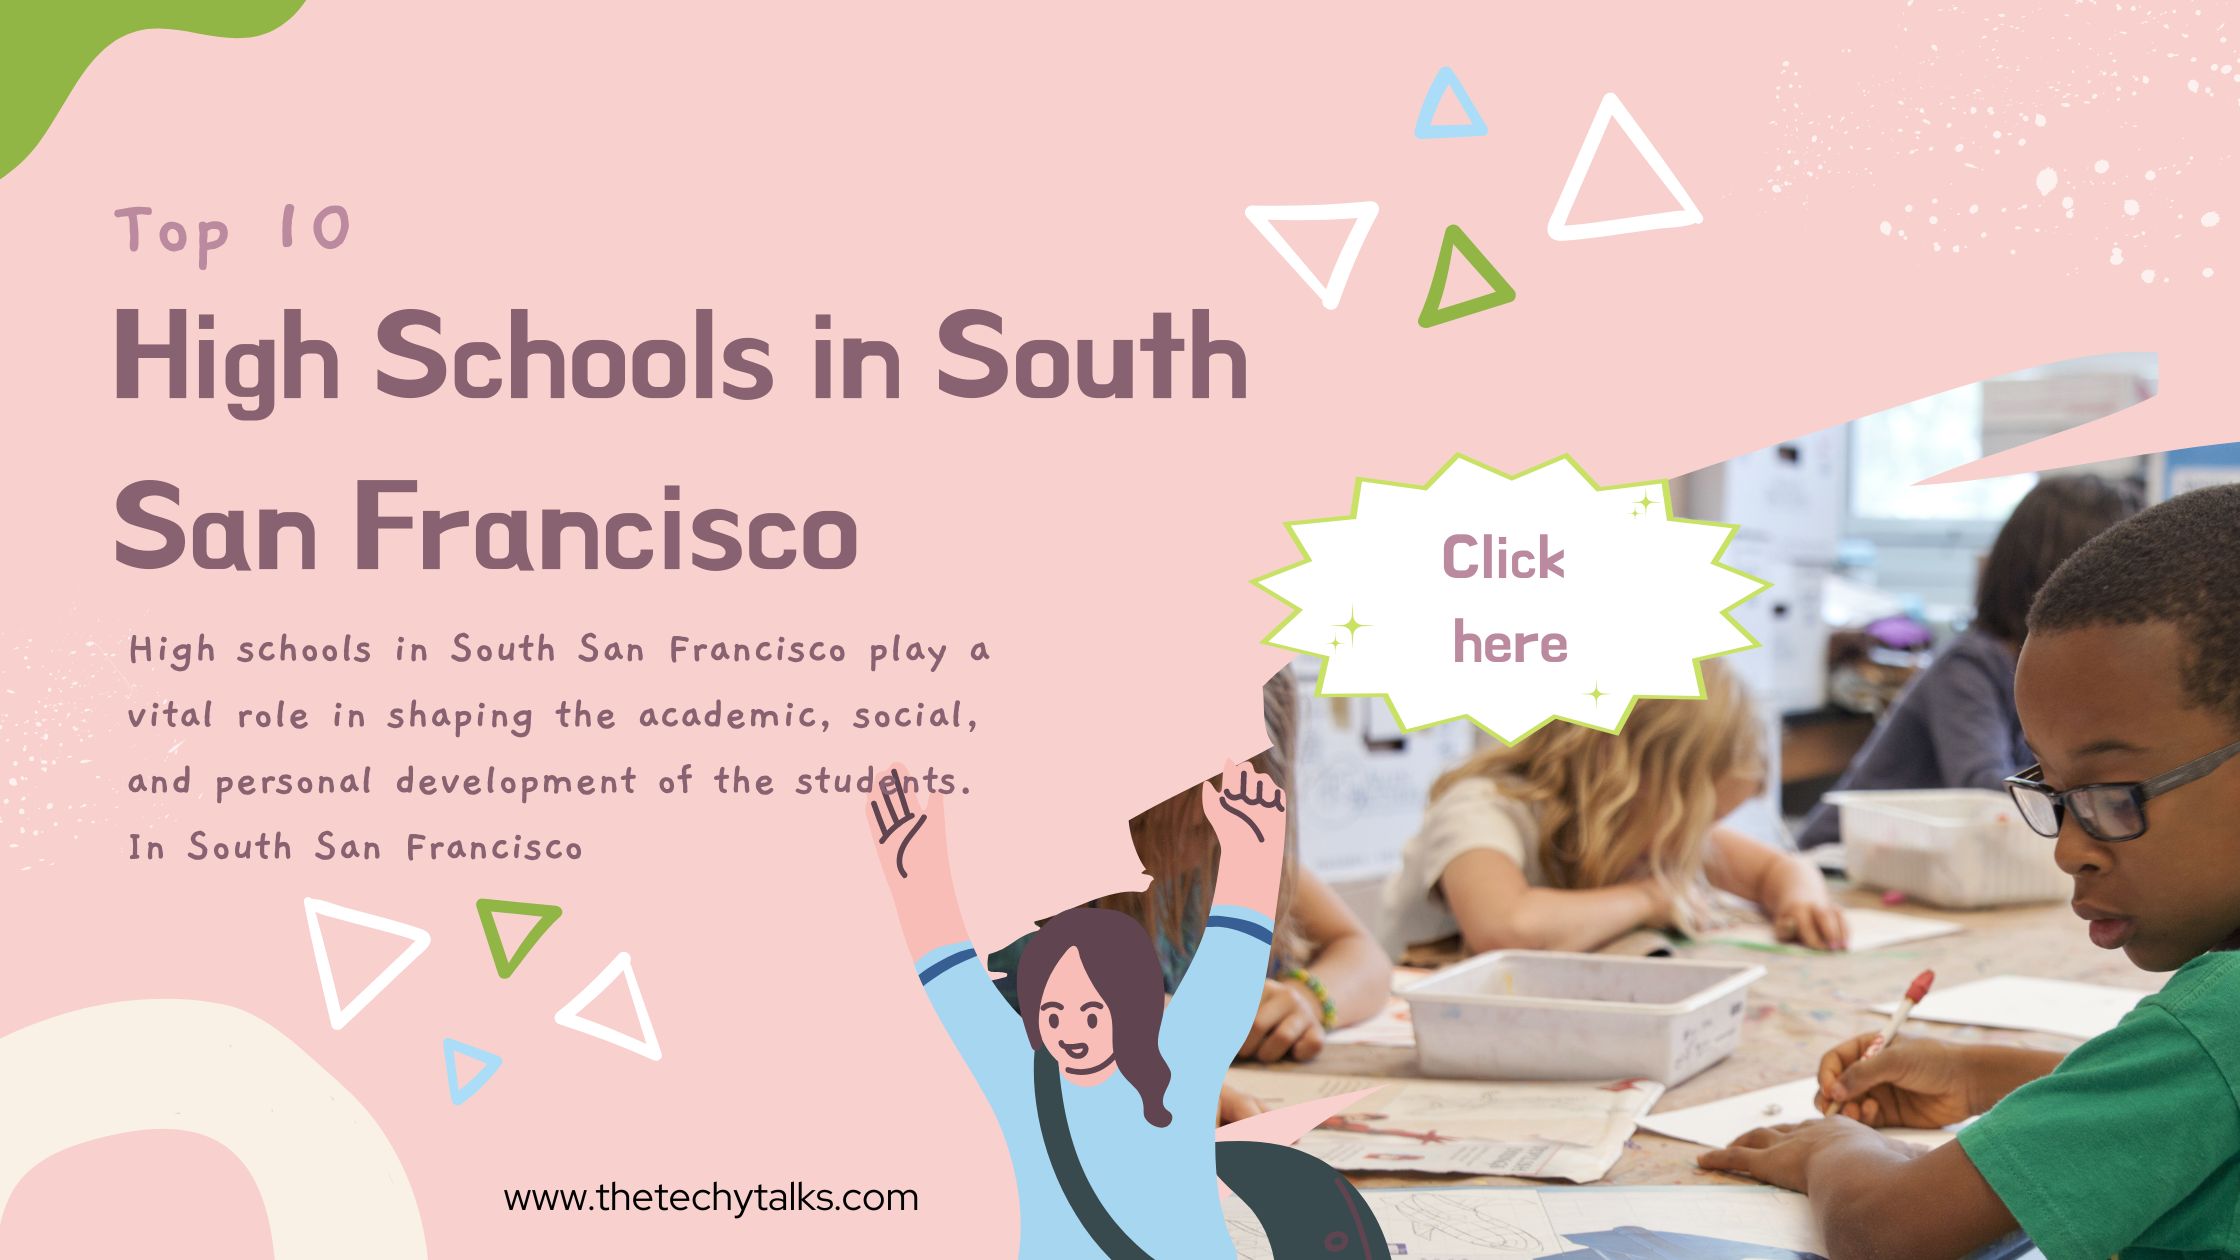 Top 10 High Schools in South San Francisco